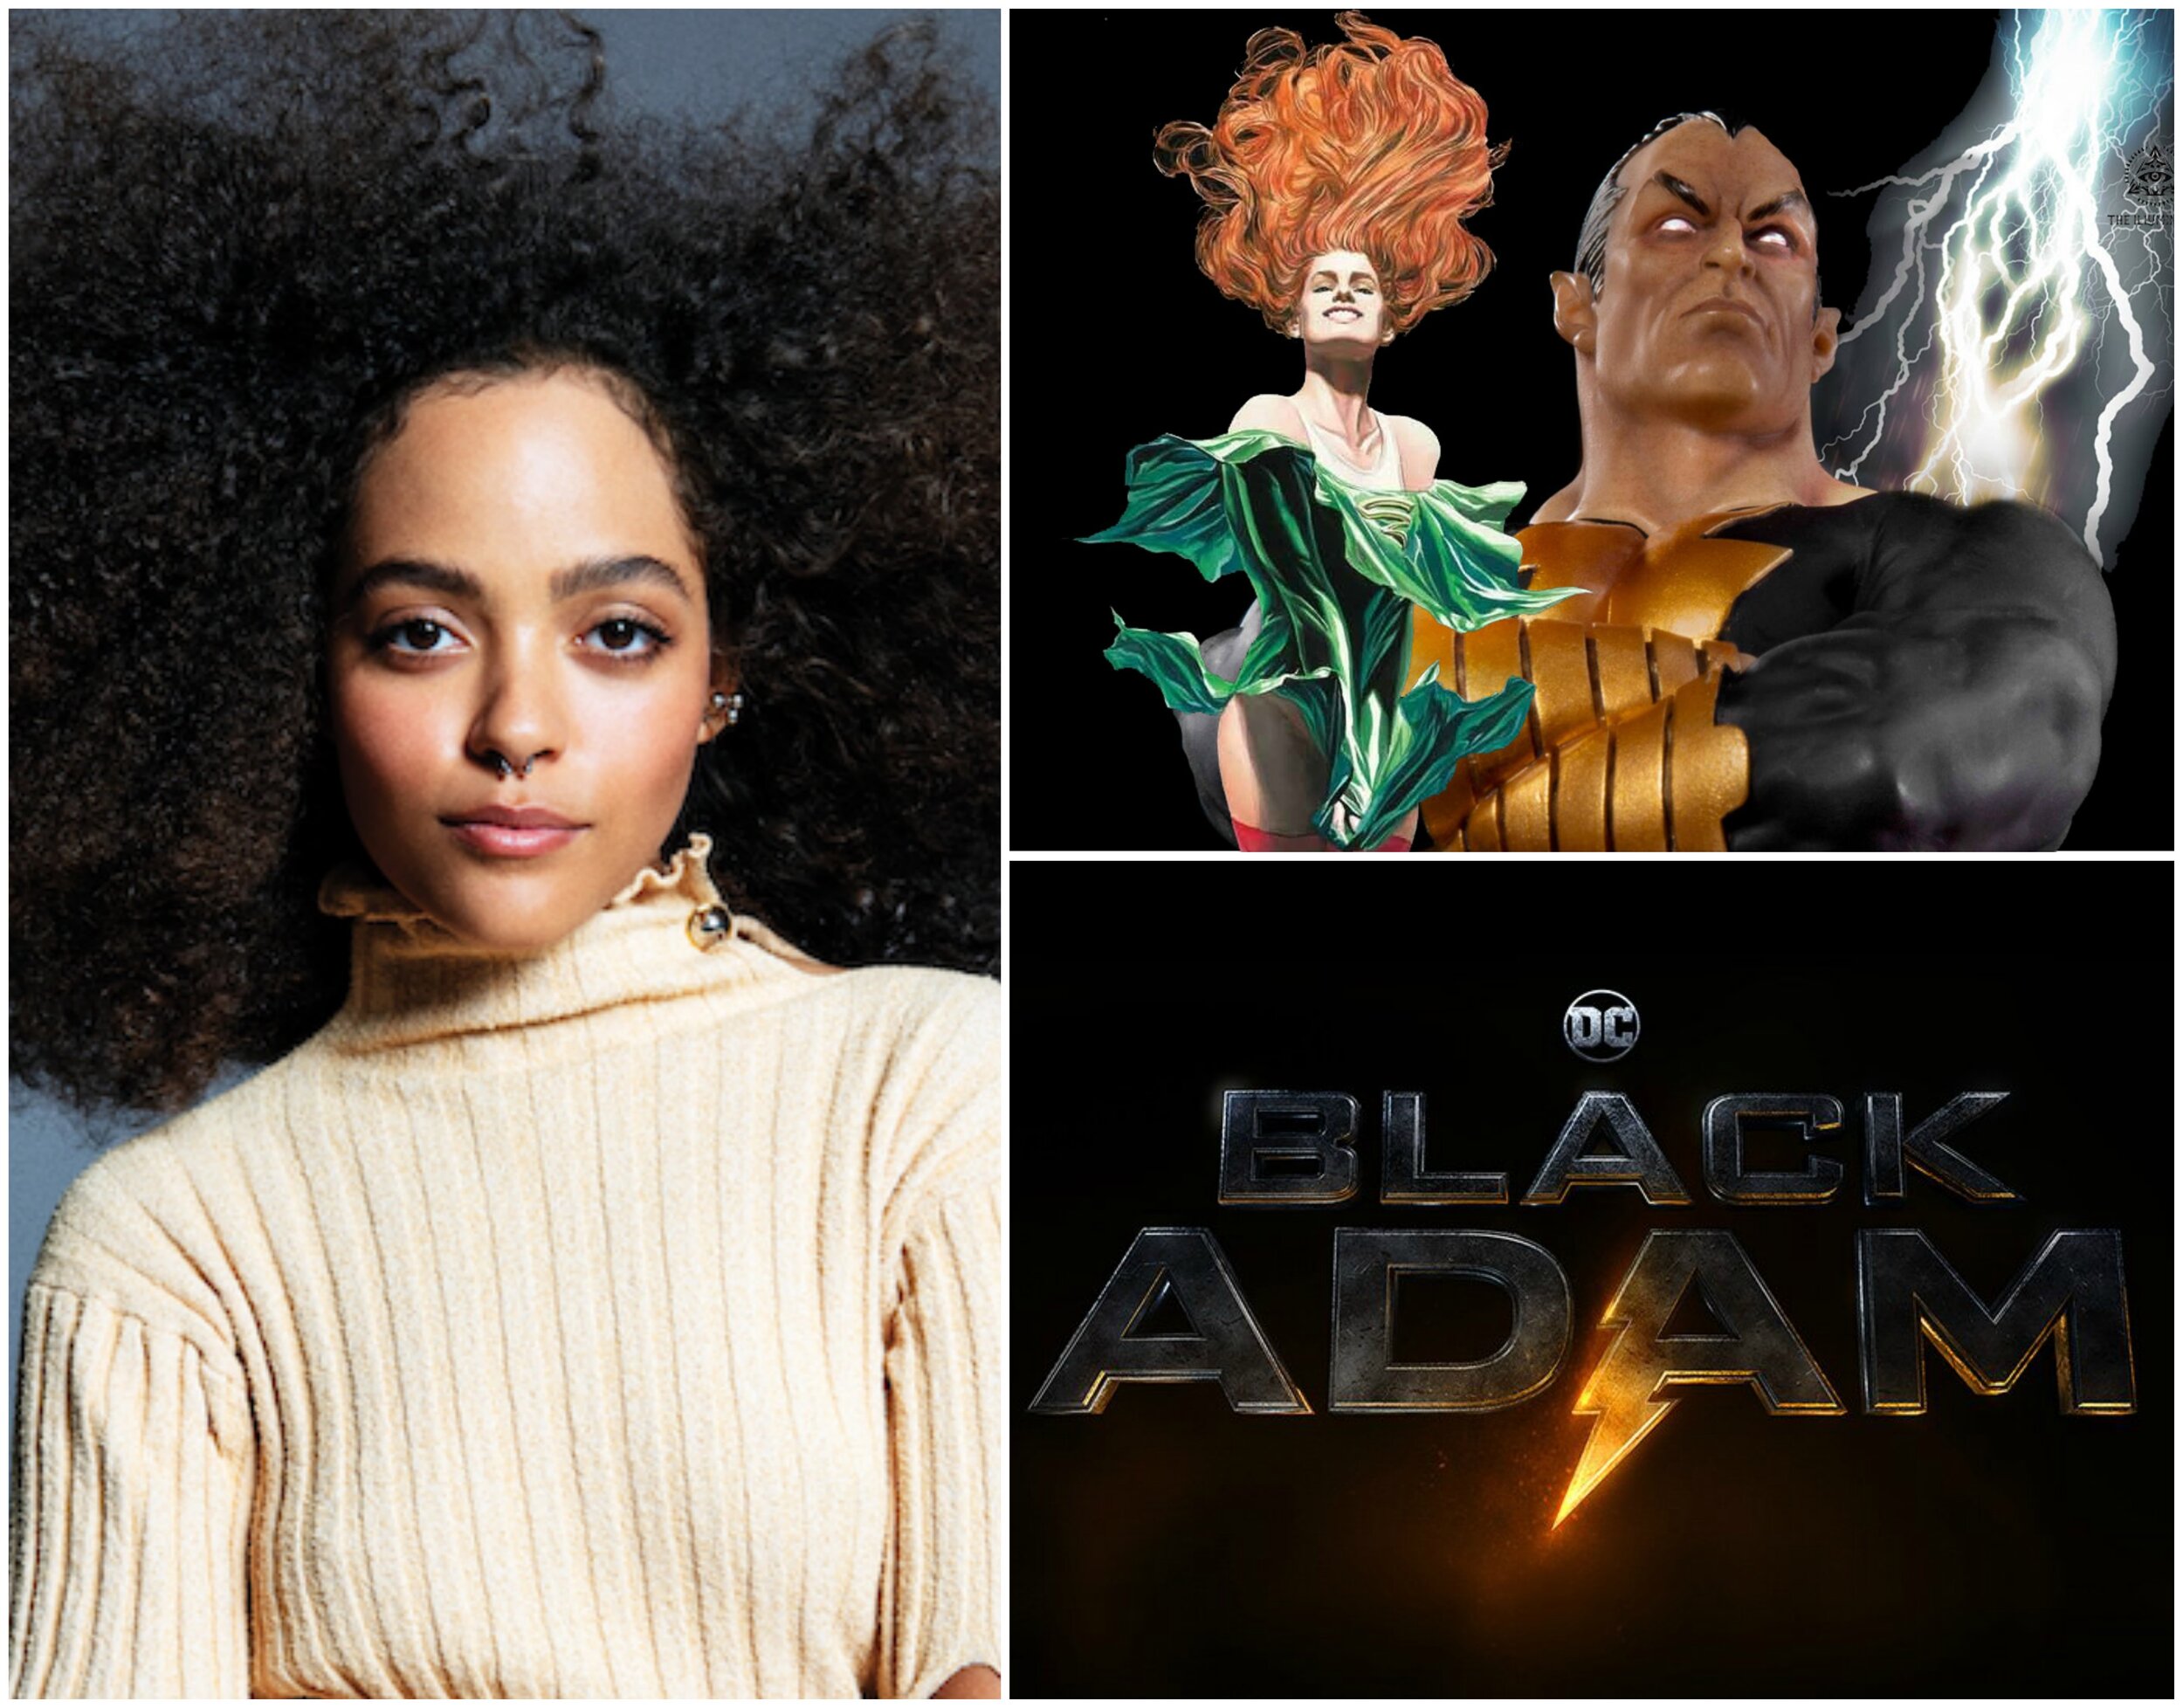 Quintessa Swindell Cast as Cyclone In the Black Adam Movie